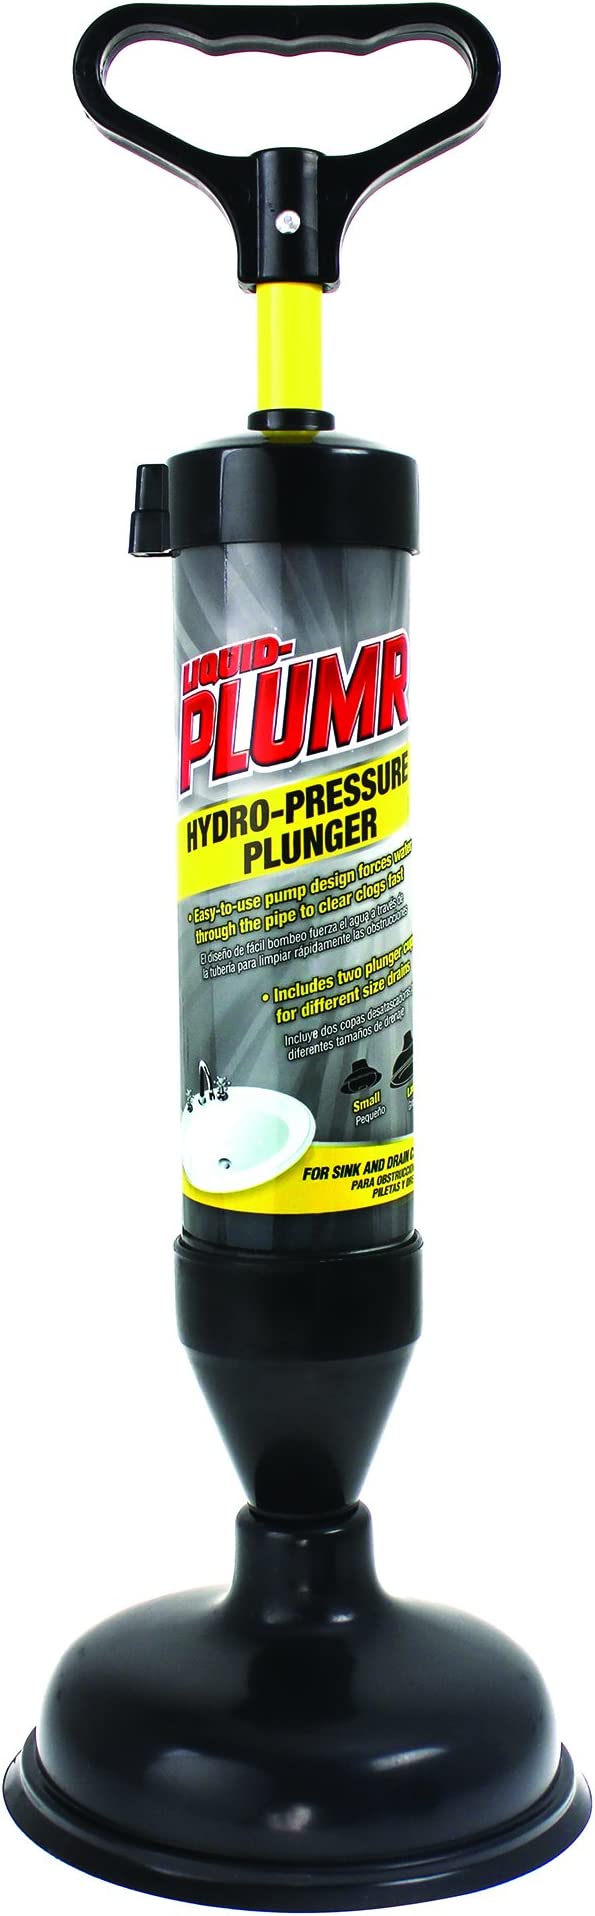 Liquid-Plumr 670087 Hydro-Pressure Plunger, Gray